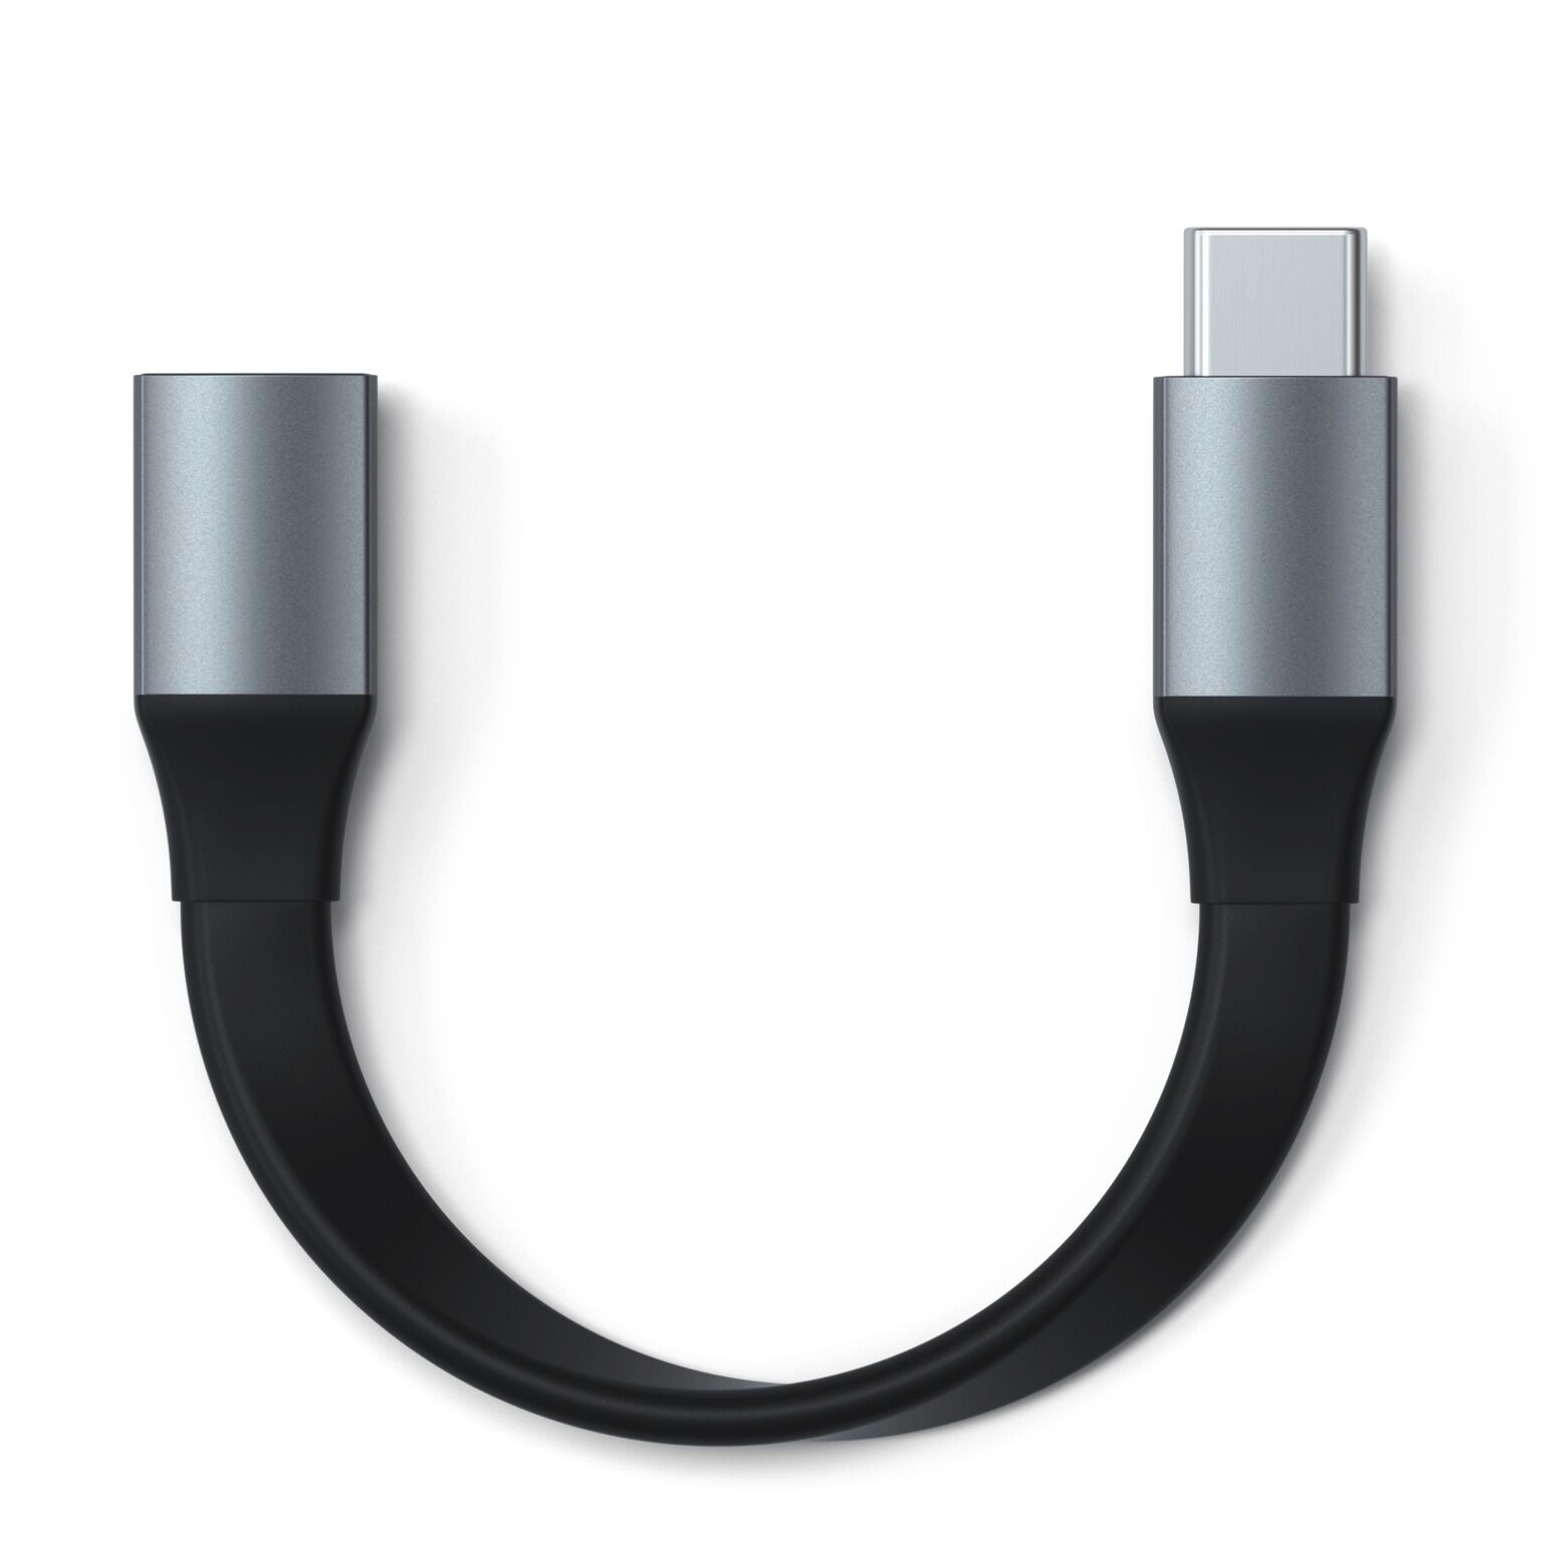 Image of Satechi - (13cm) USB C auf USB C Verlängerungskabel Adapter (ST-TCECM) - Space Grau bei Apfelkiste.ch